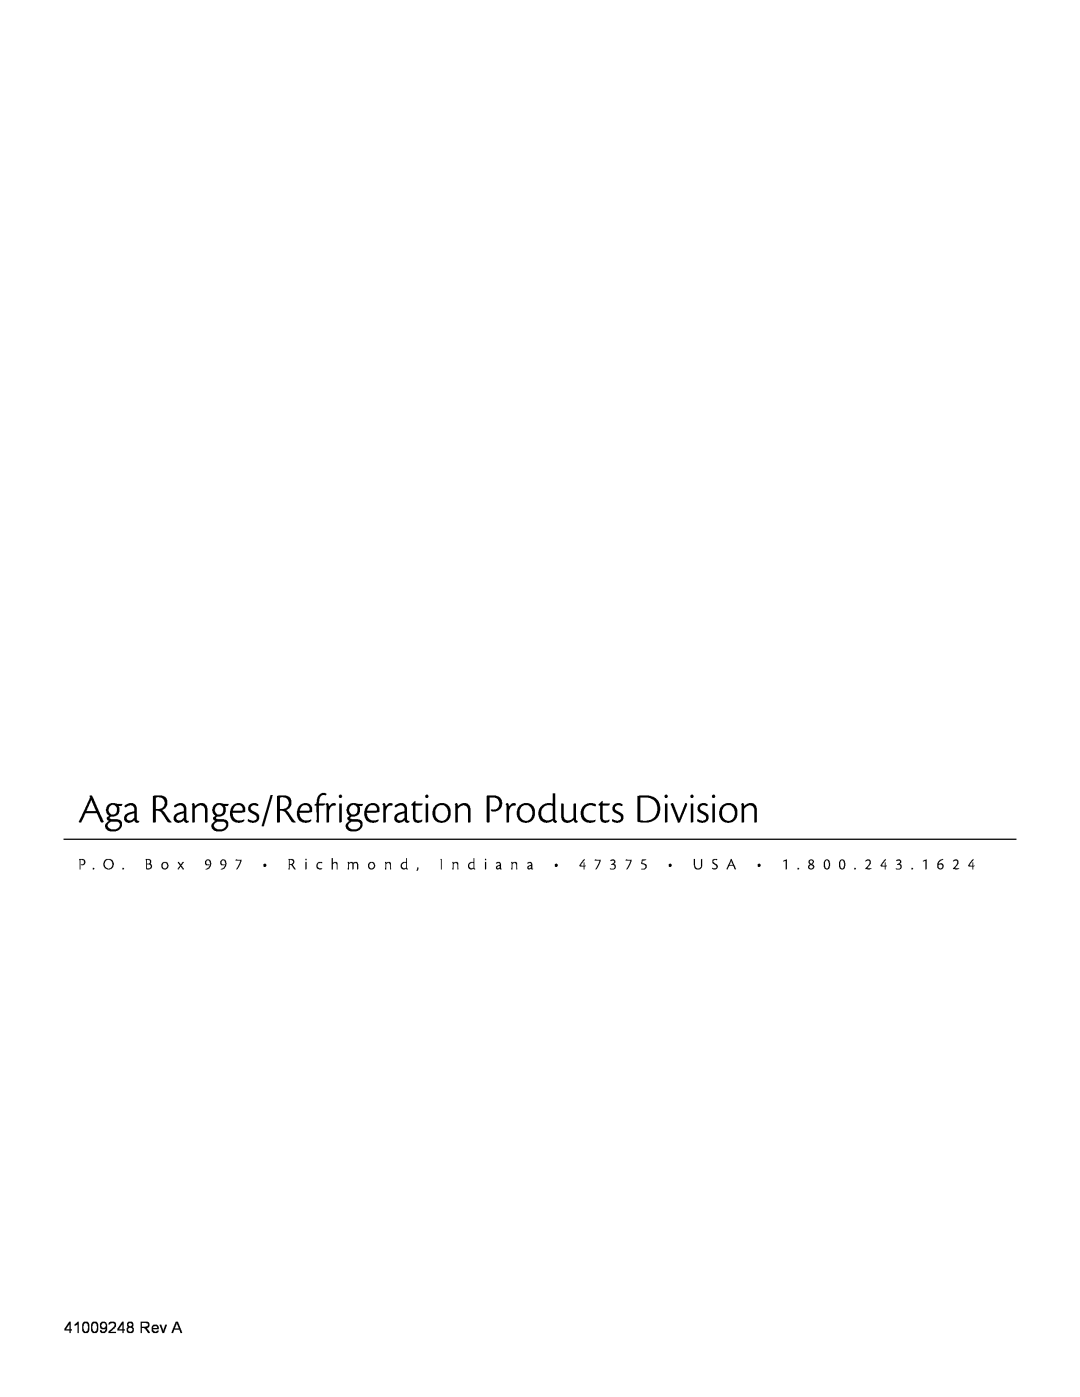 Aga Ranges 115V, 6WCA manual Aga Ranges/Refrigeration Products Division, Rev A 